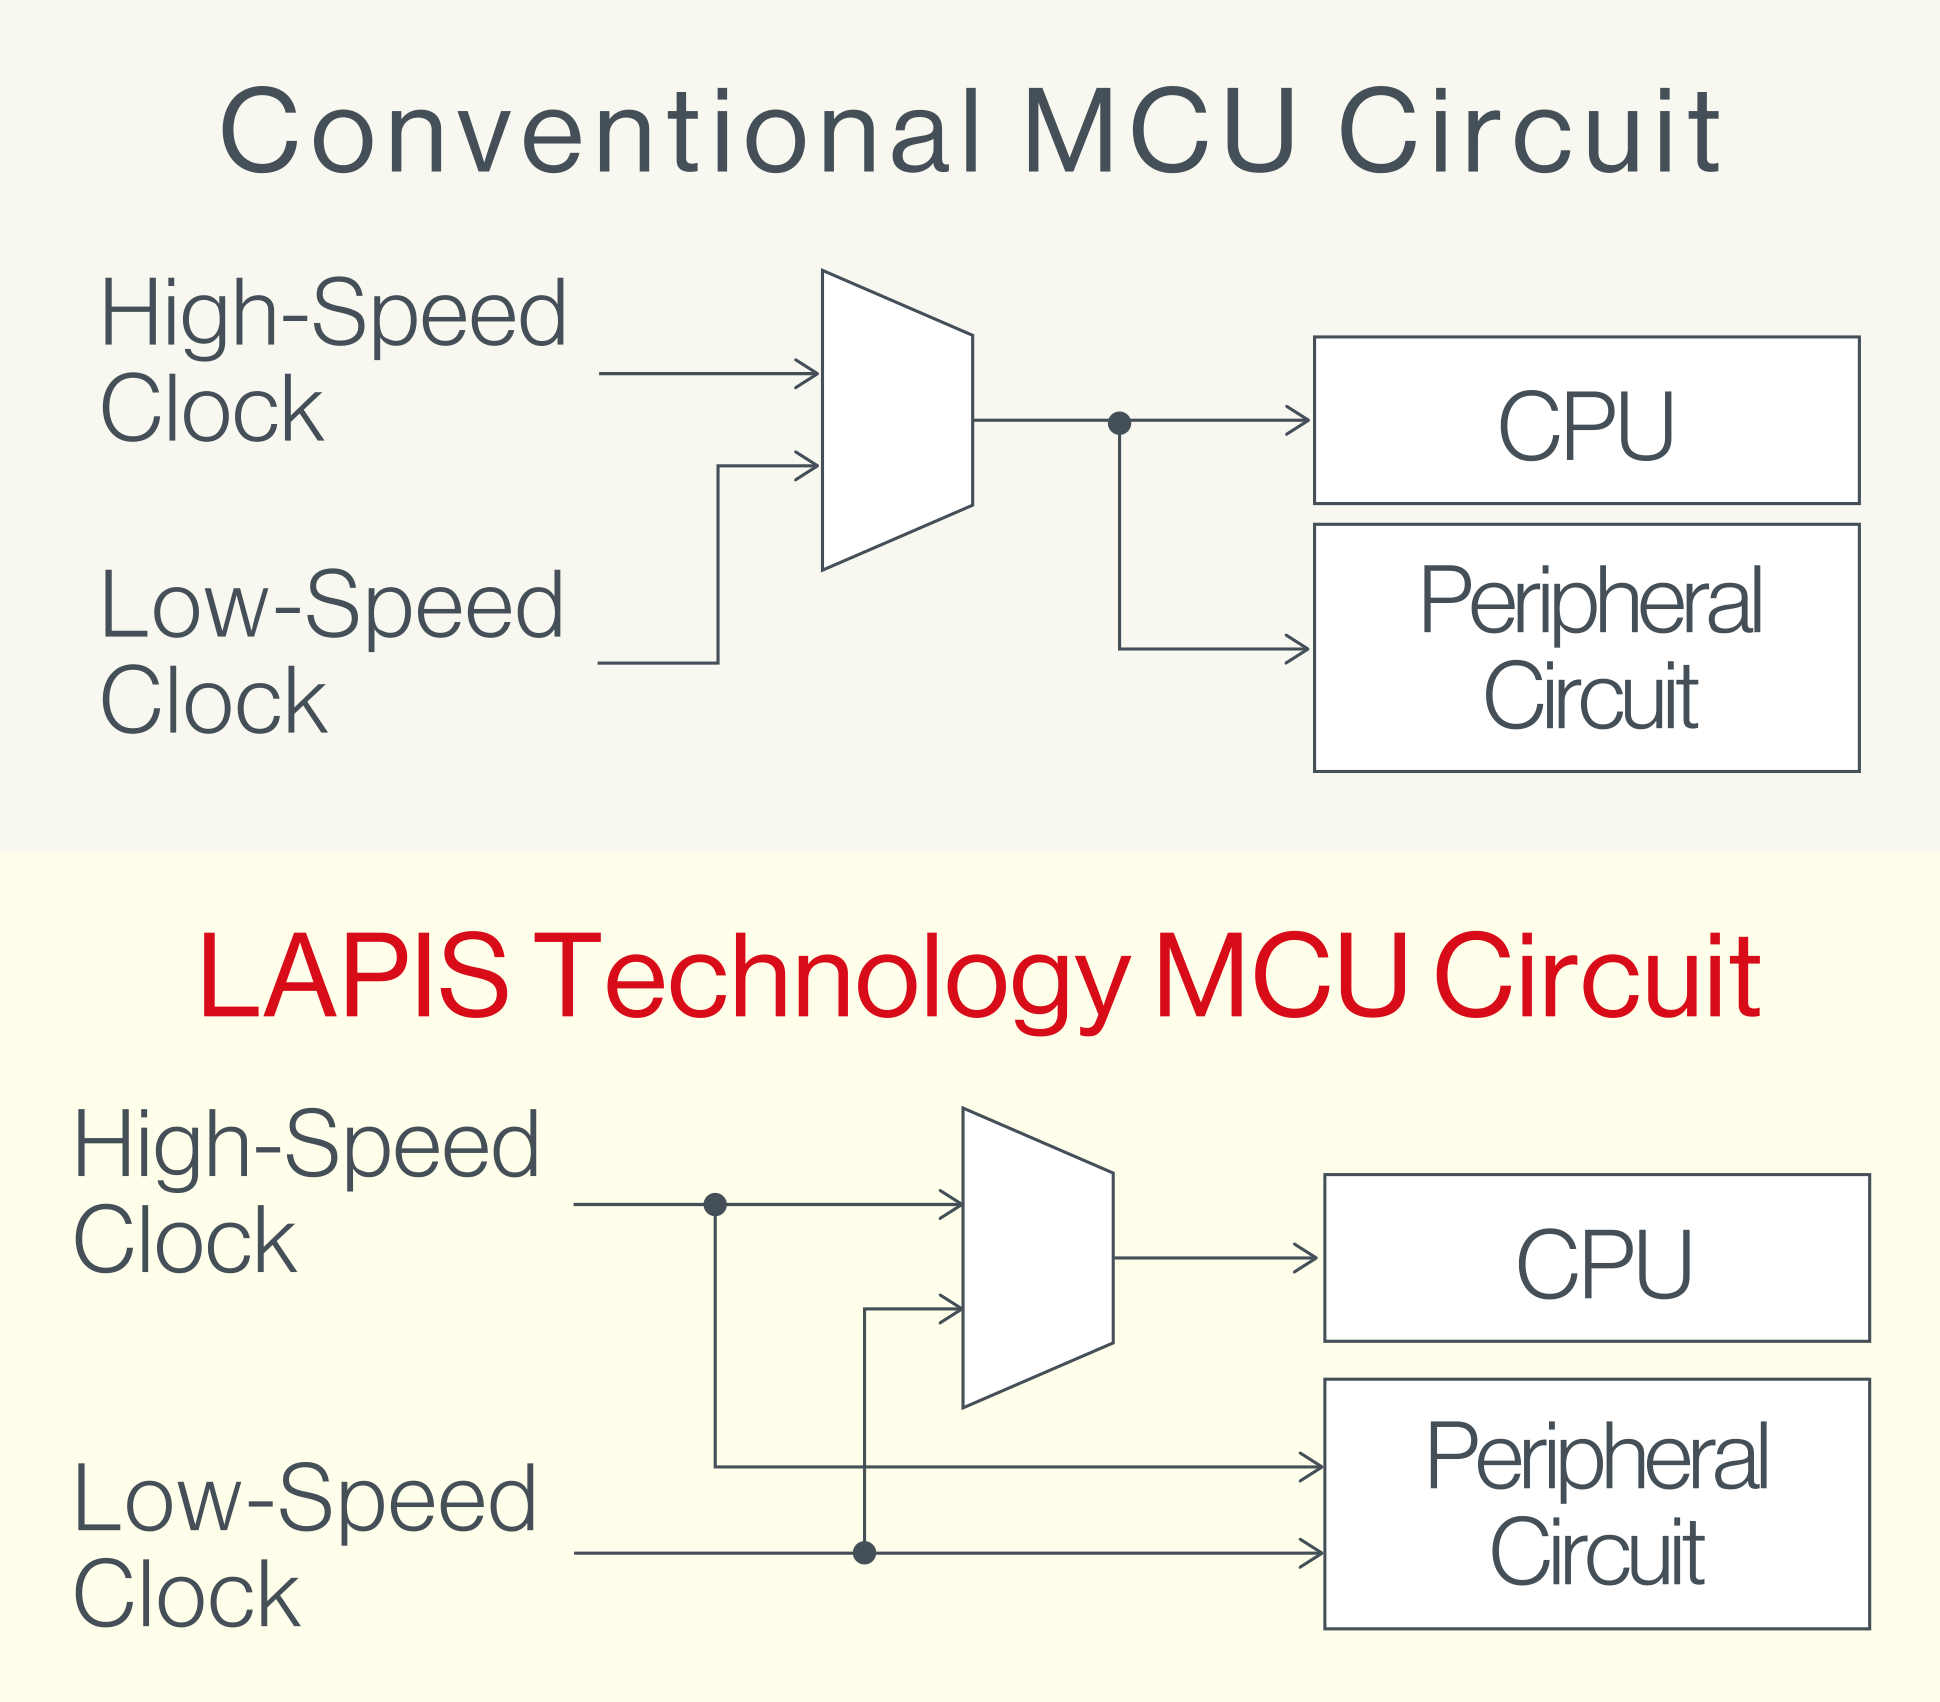 LAPIS Technology's MCU Circuit